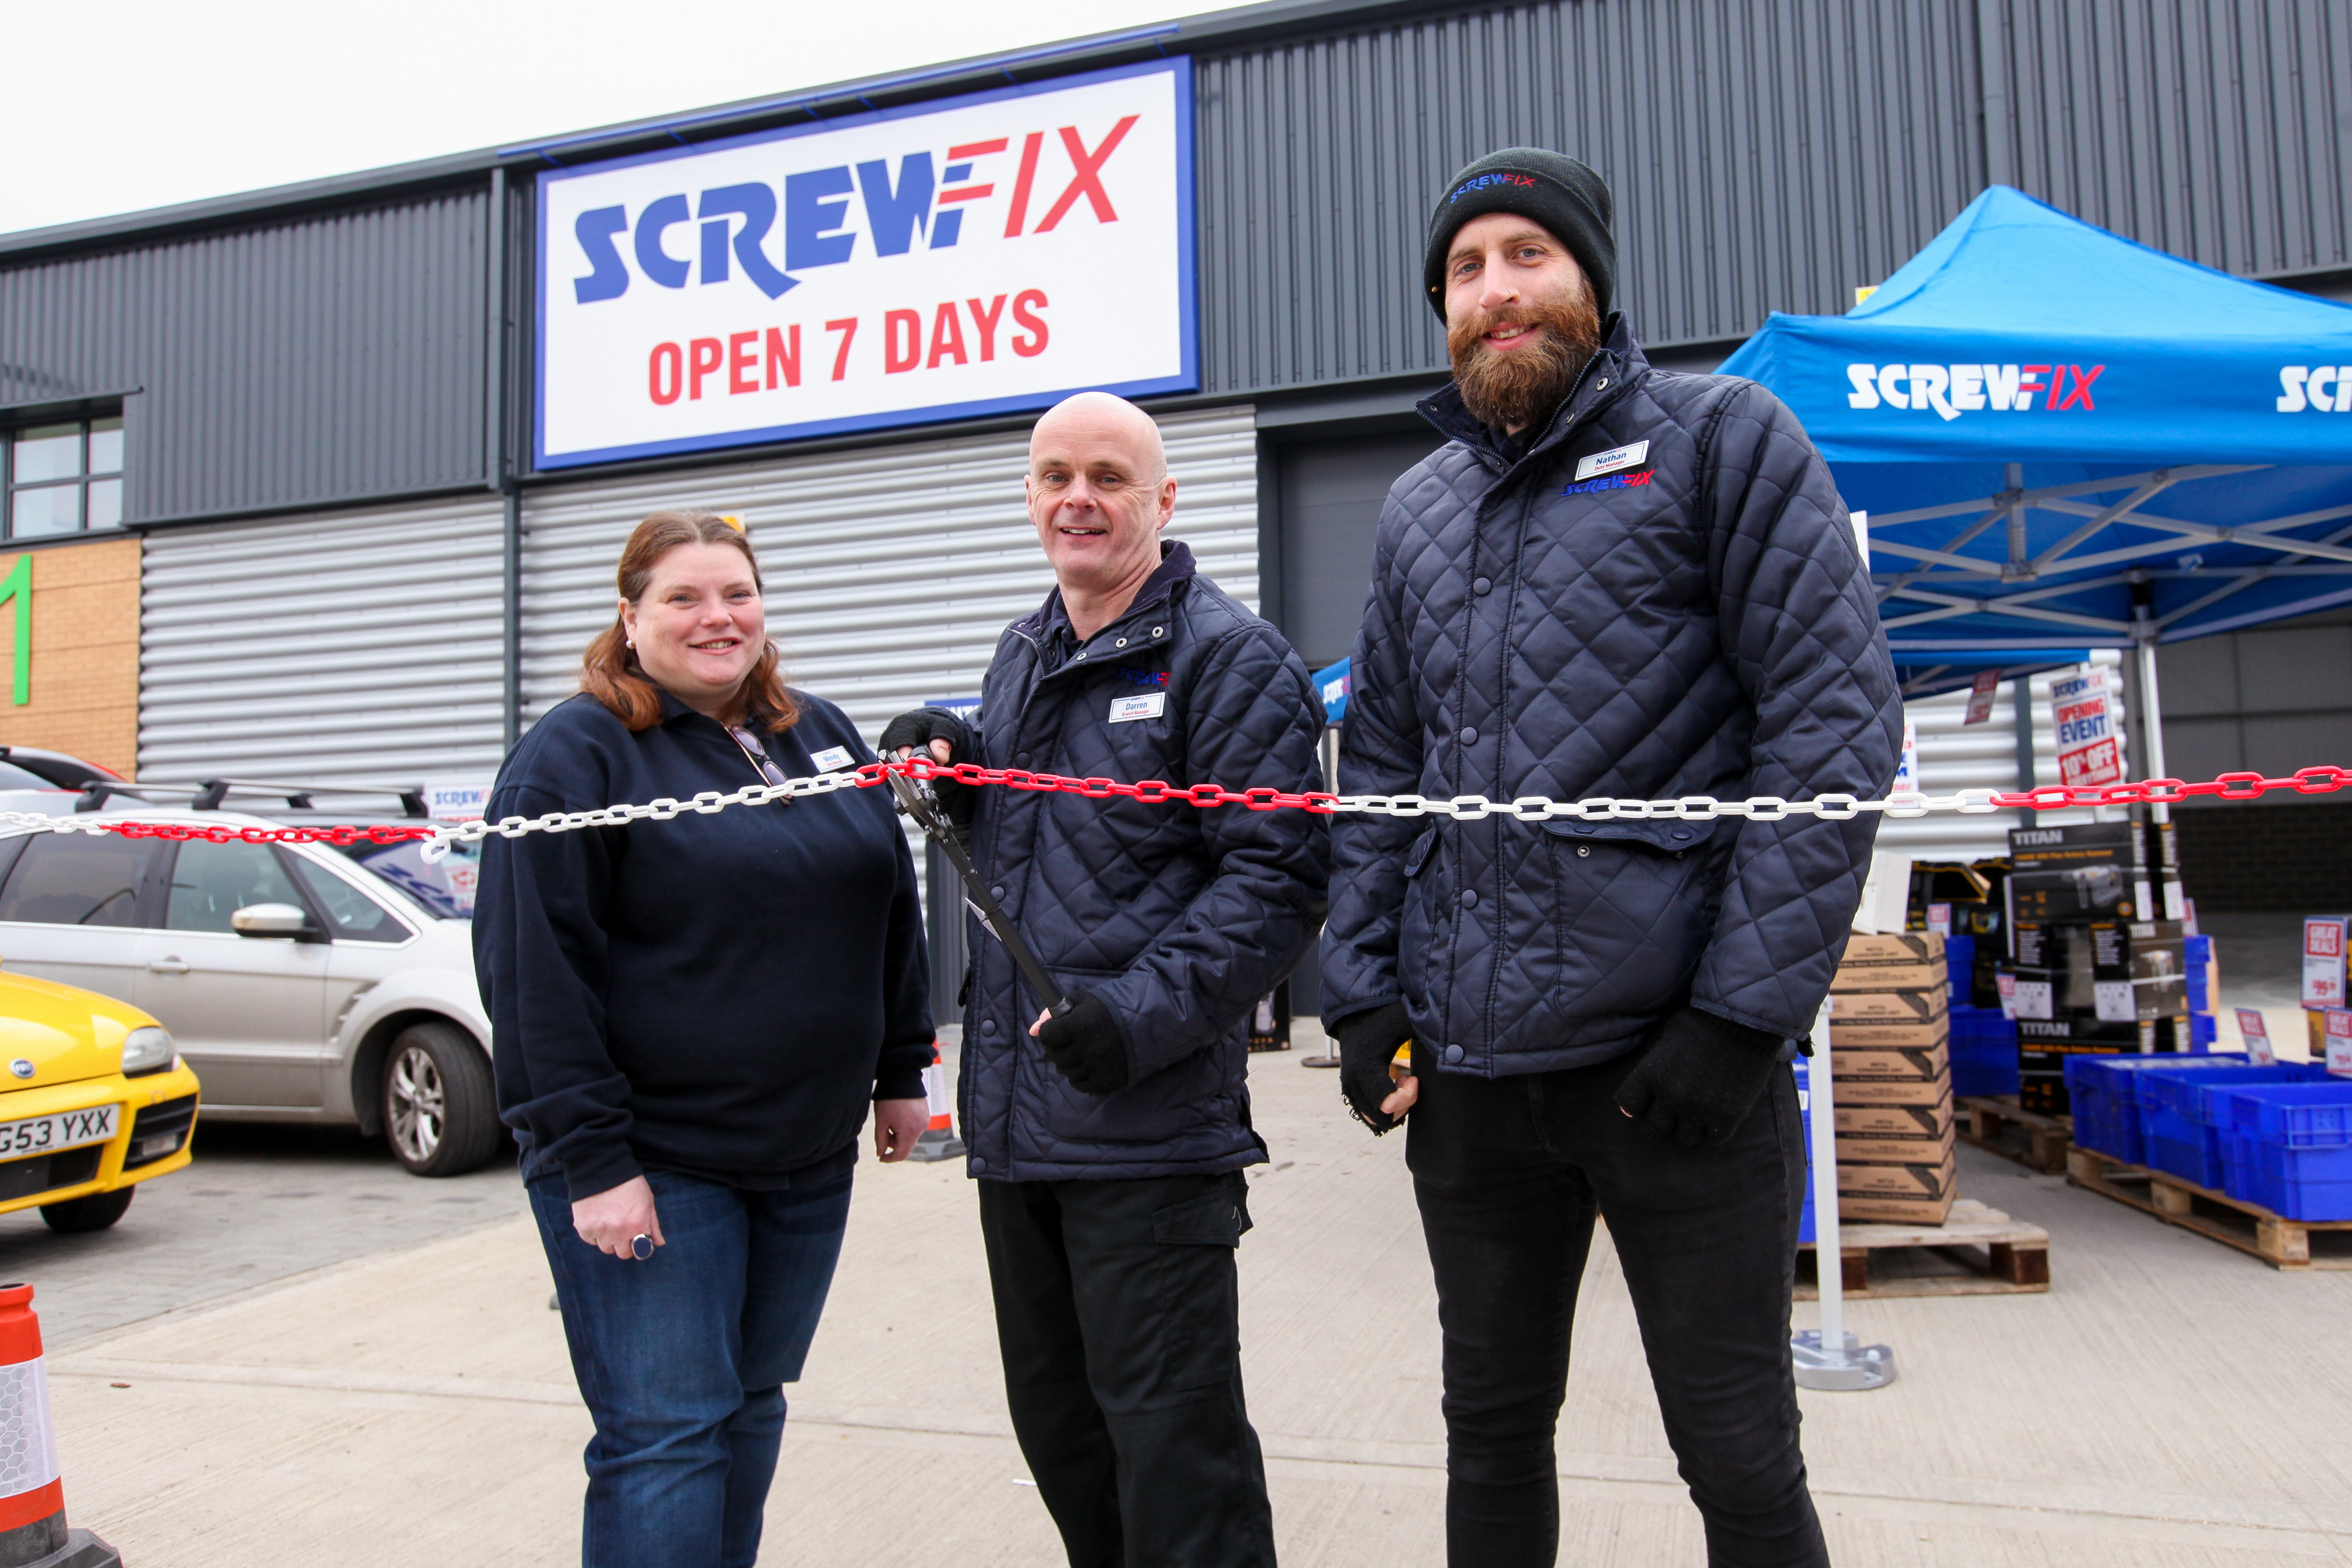 Egham celebrates new Screwfix store opening